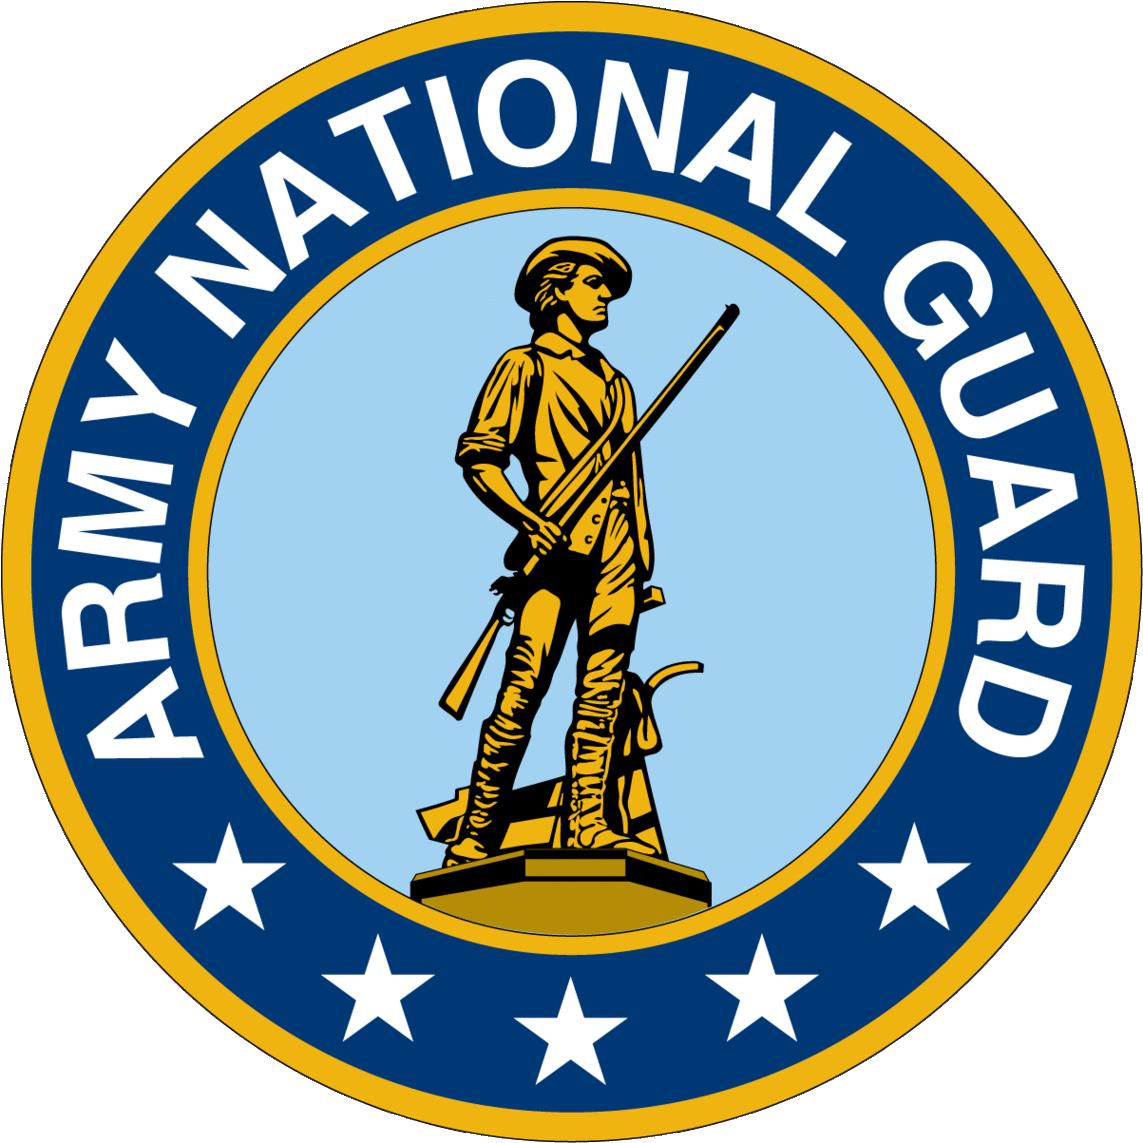 Us army logo clip art